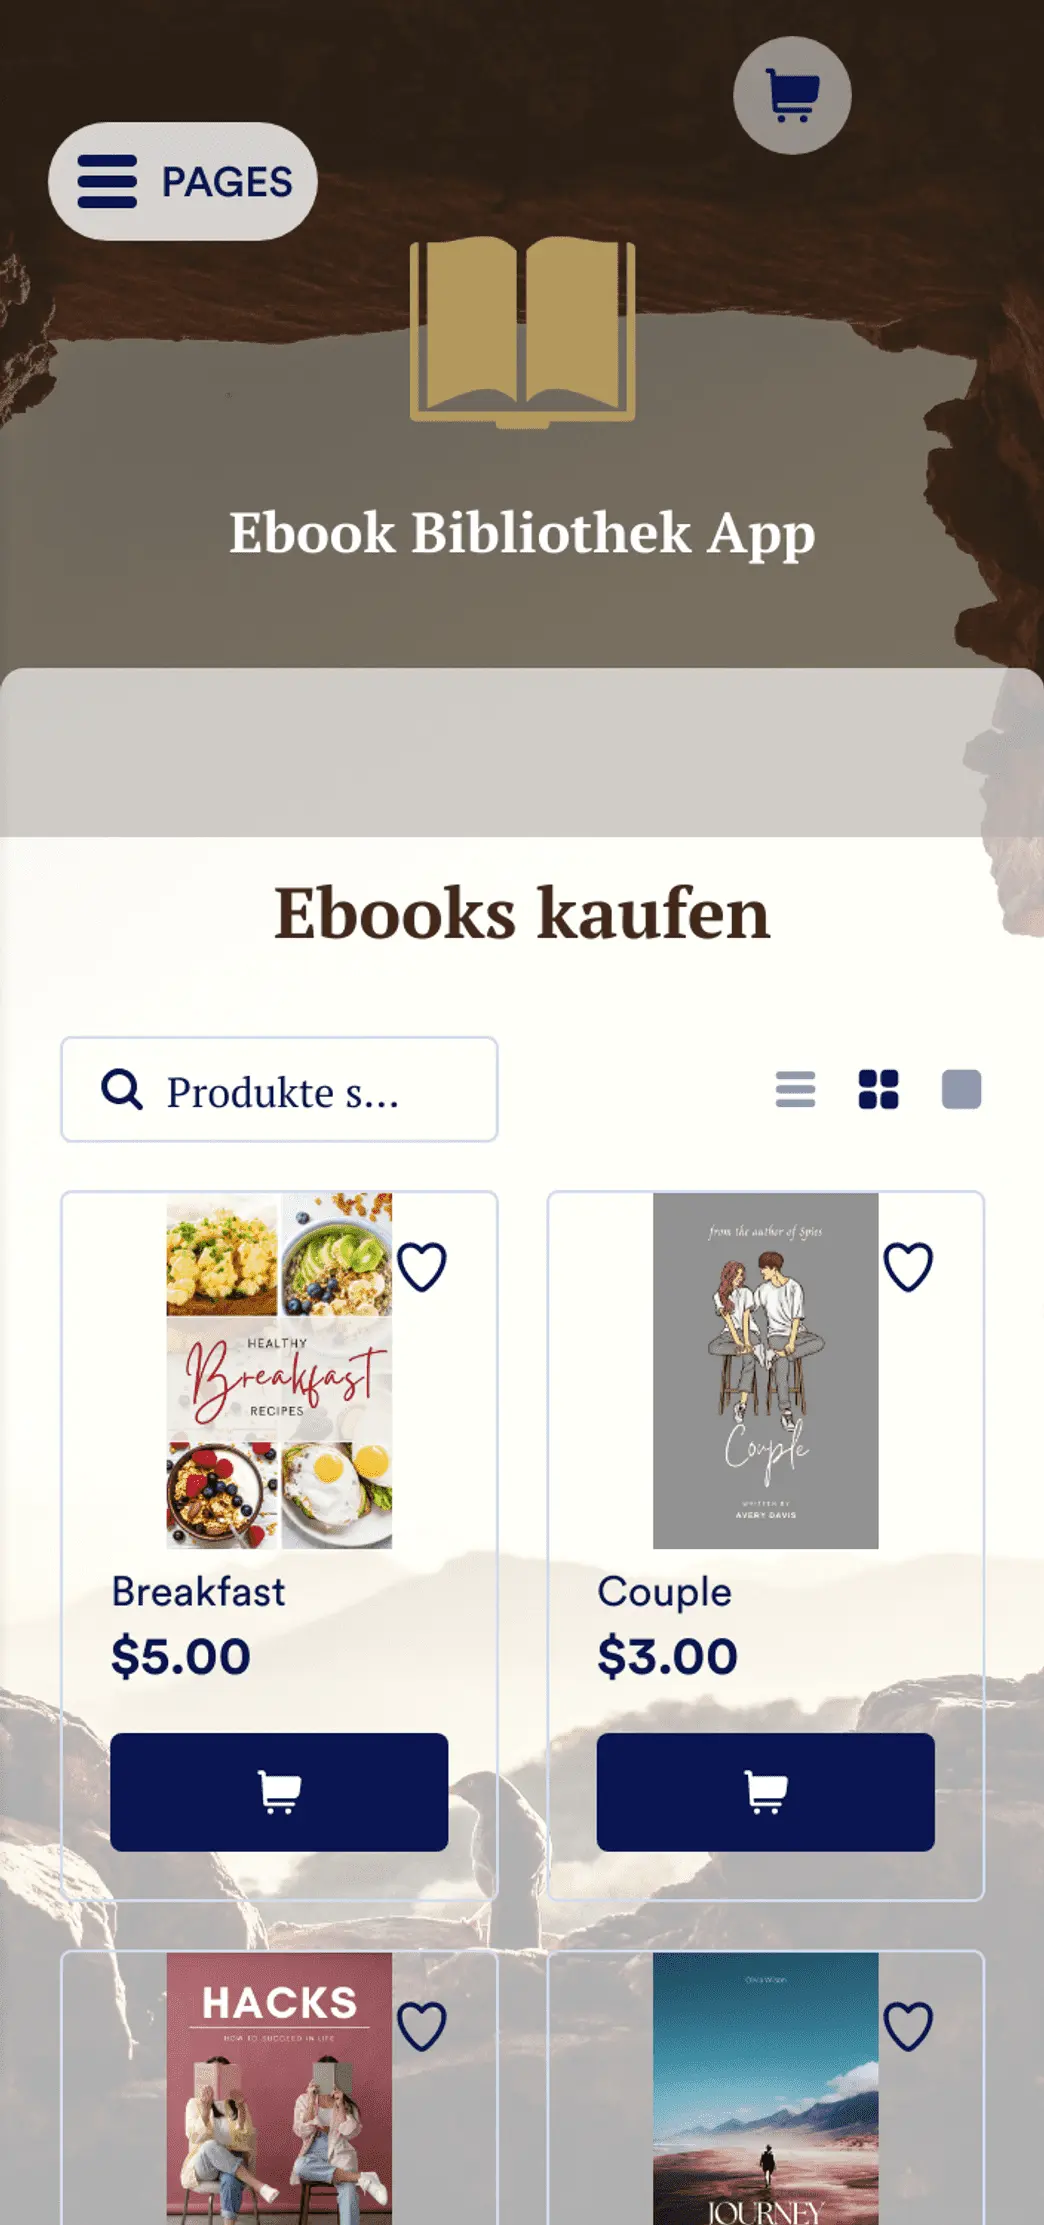 Ebook Bibliothek App